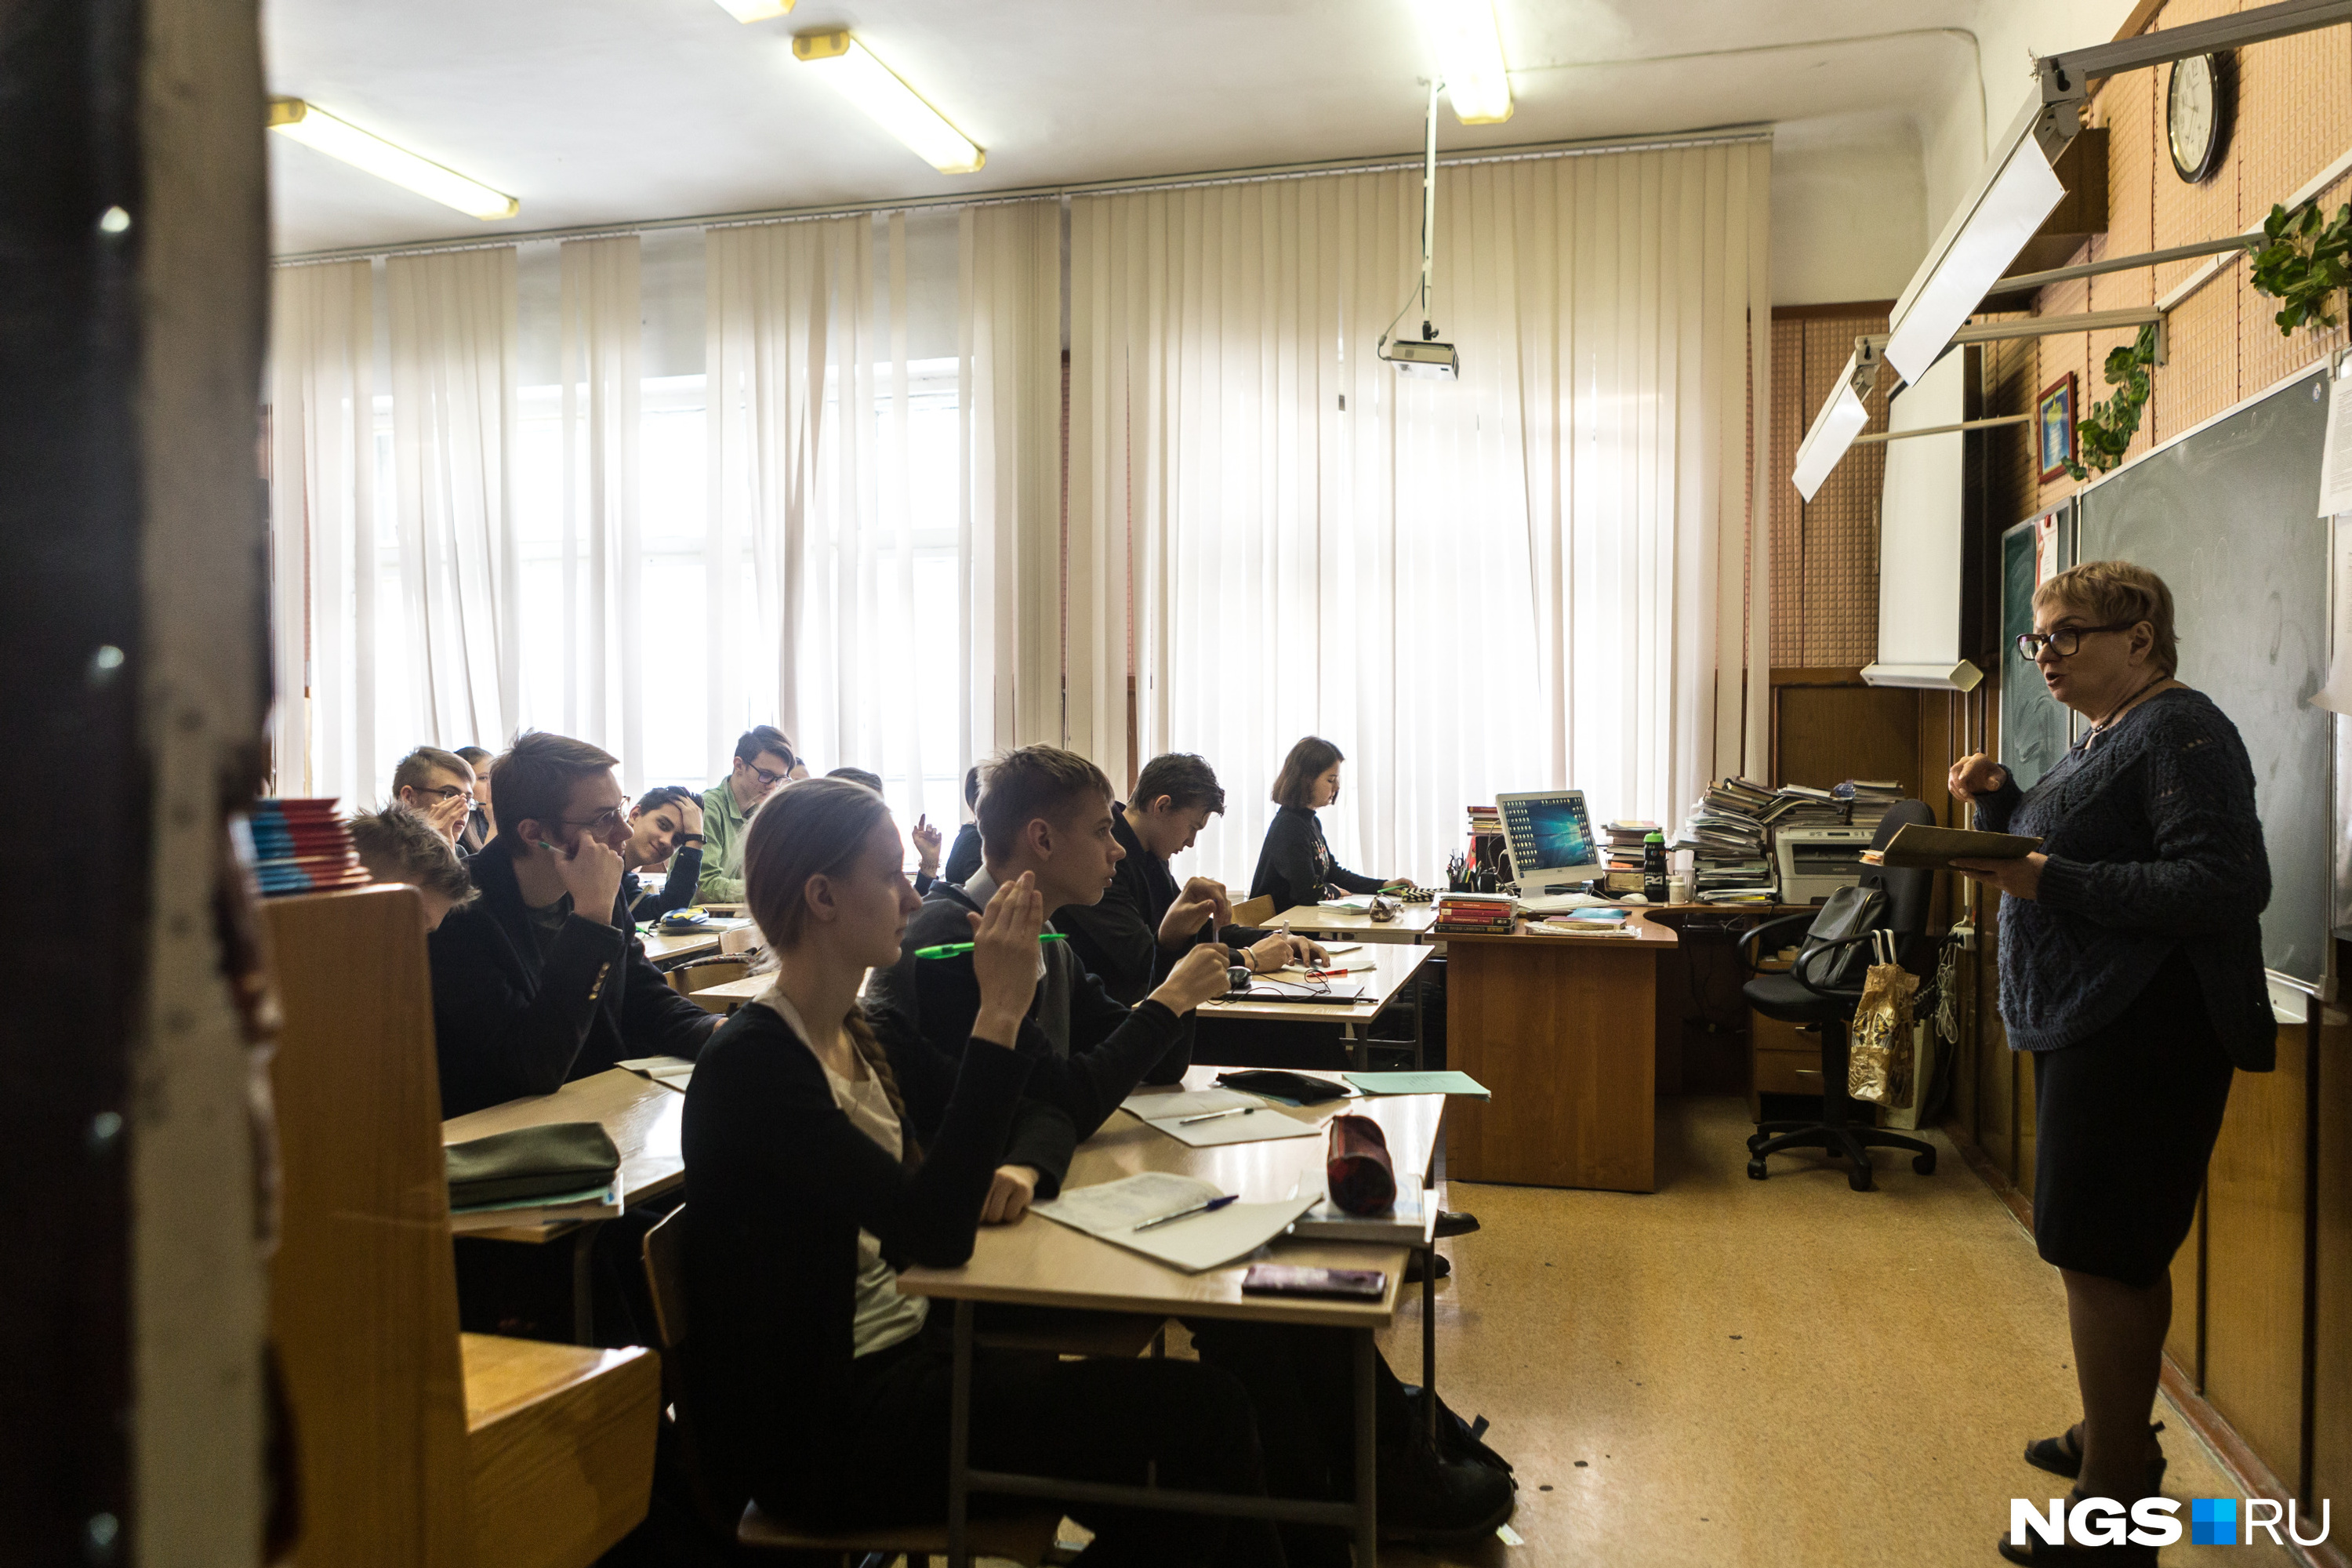 Школа на Крылова Новосибирск. Новая школа Крылова Новосибирска фото.